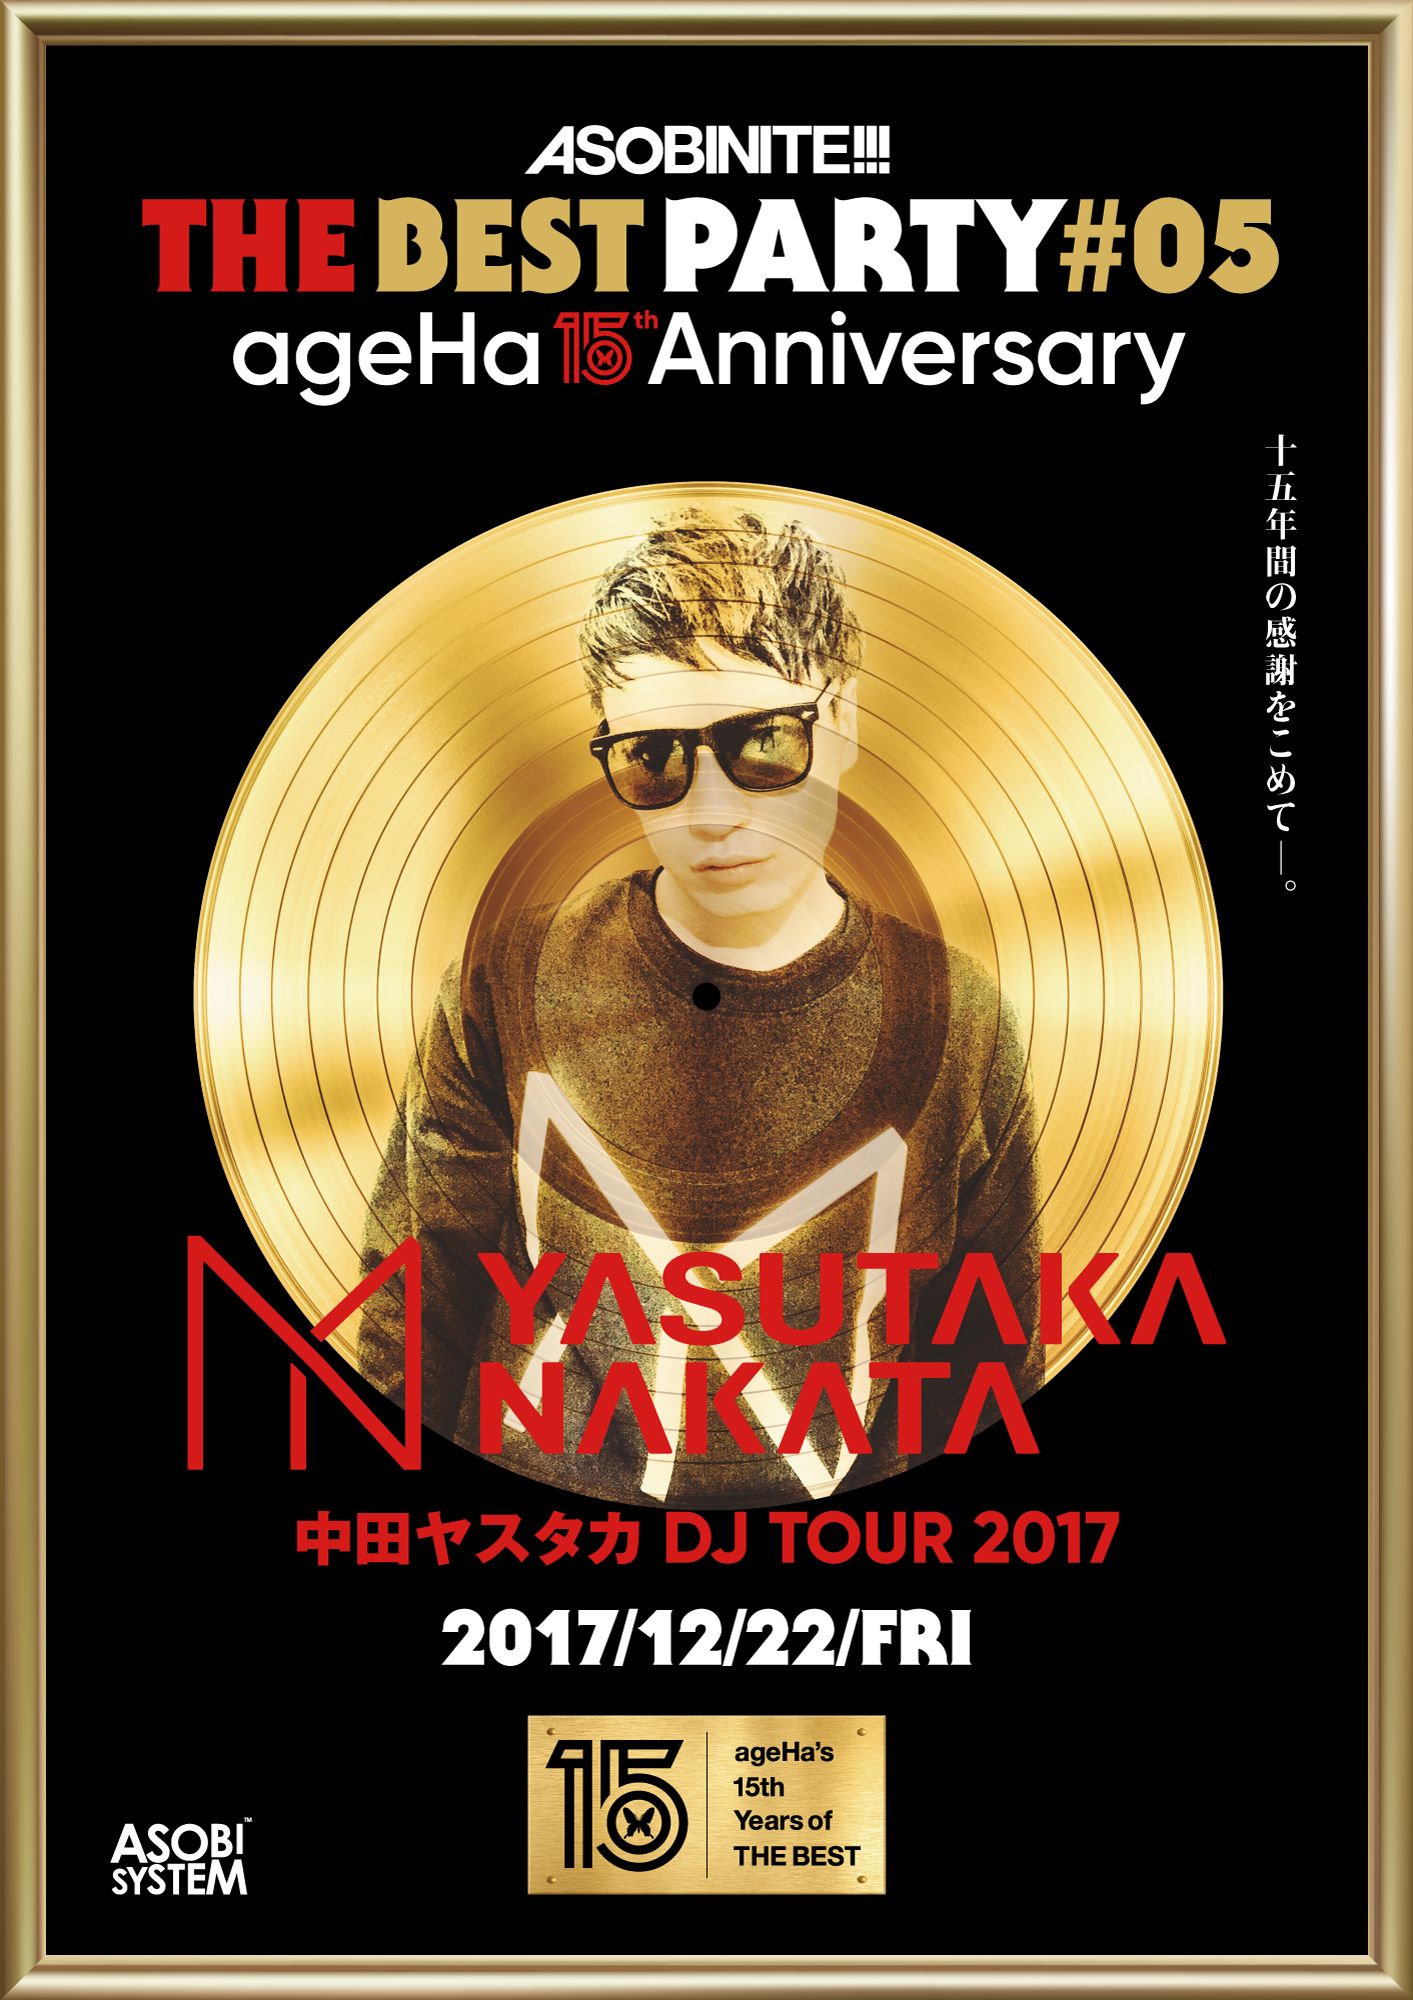 ageHa’s 15th ANNIVERSARY “THE BEST PARTY #05” feat. ASOBINITE!!! -中田ヤスタカ DJ TOUR 2017-